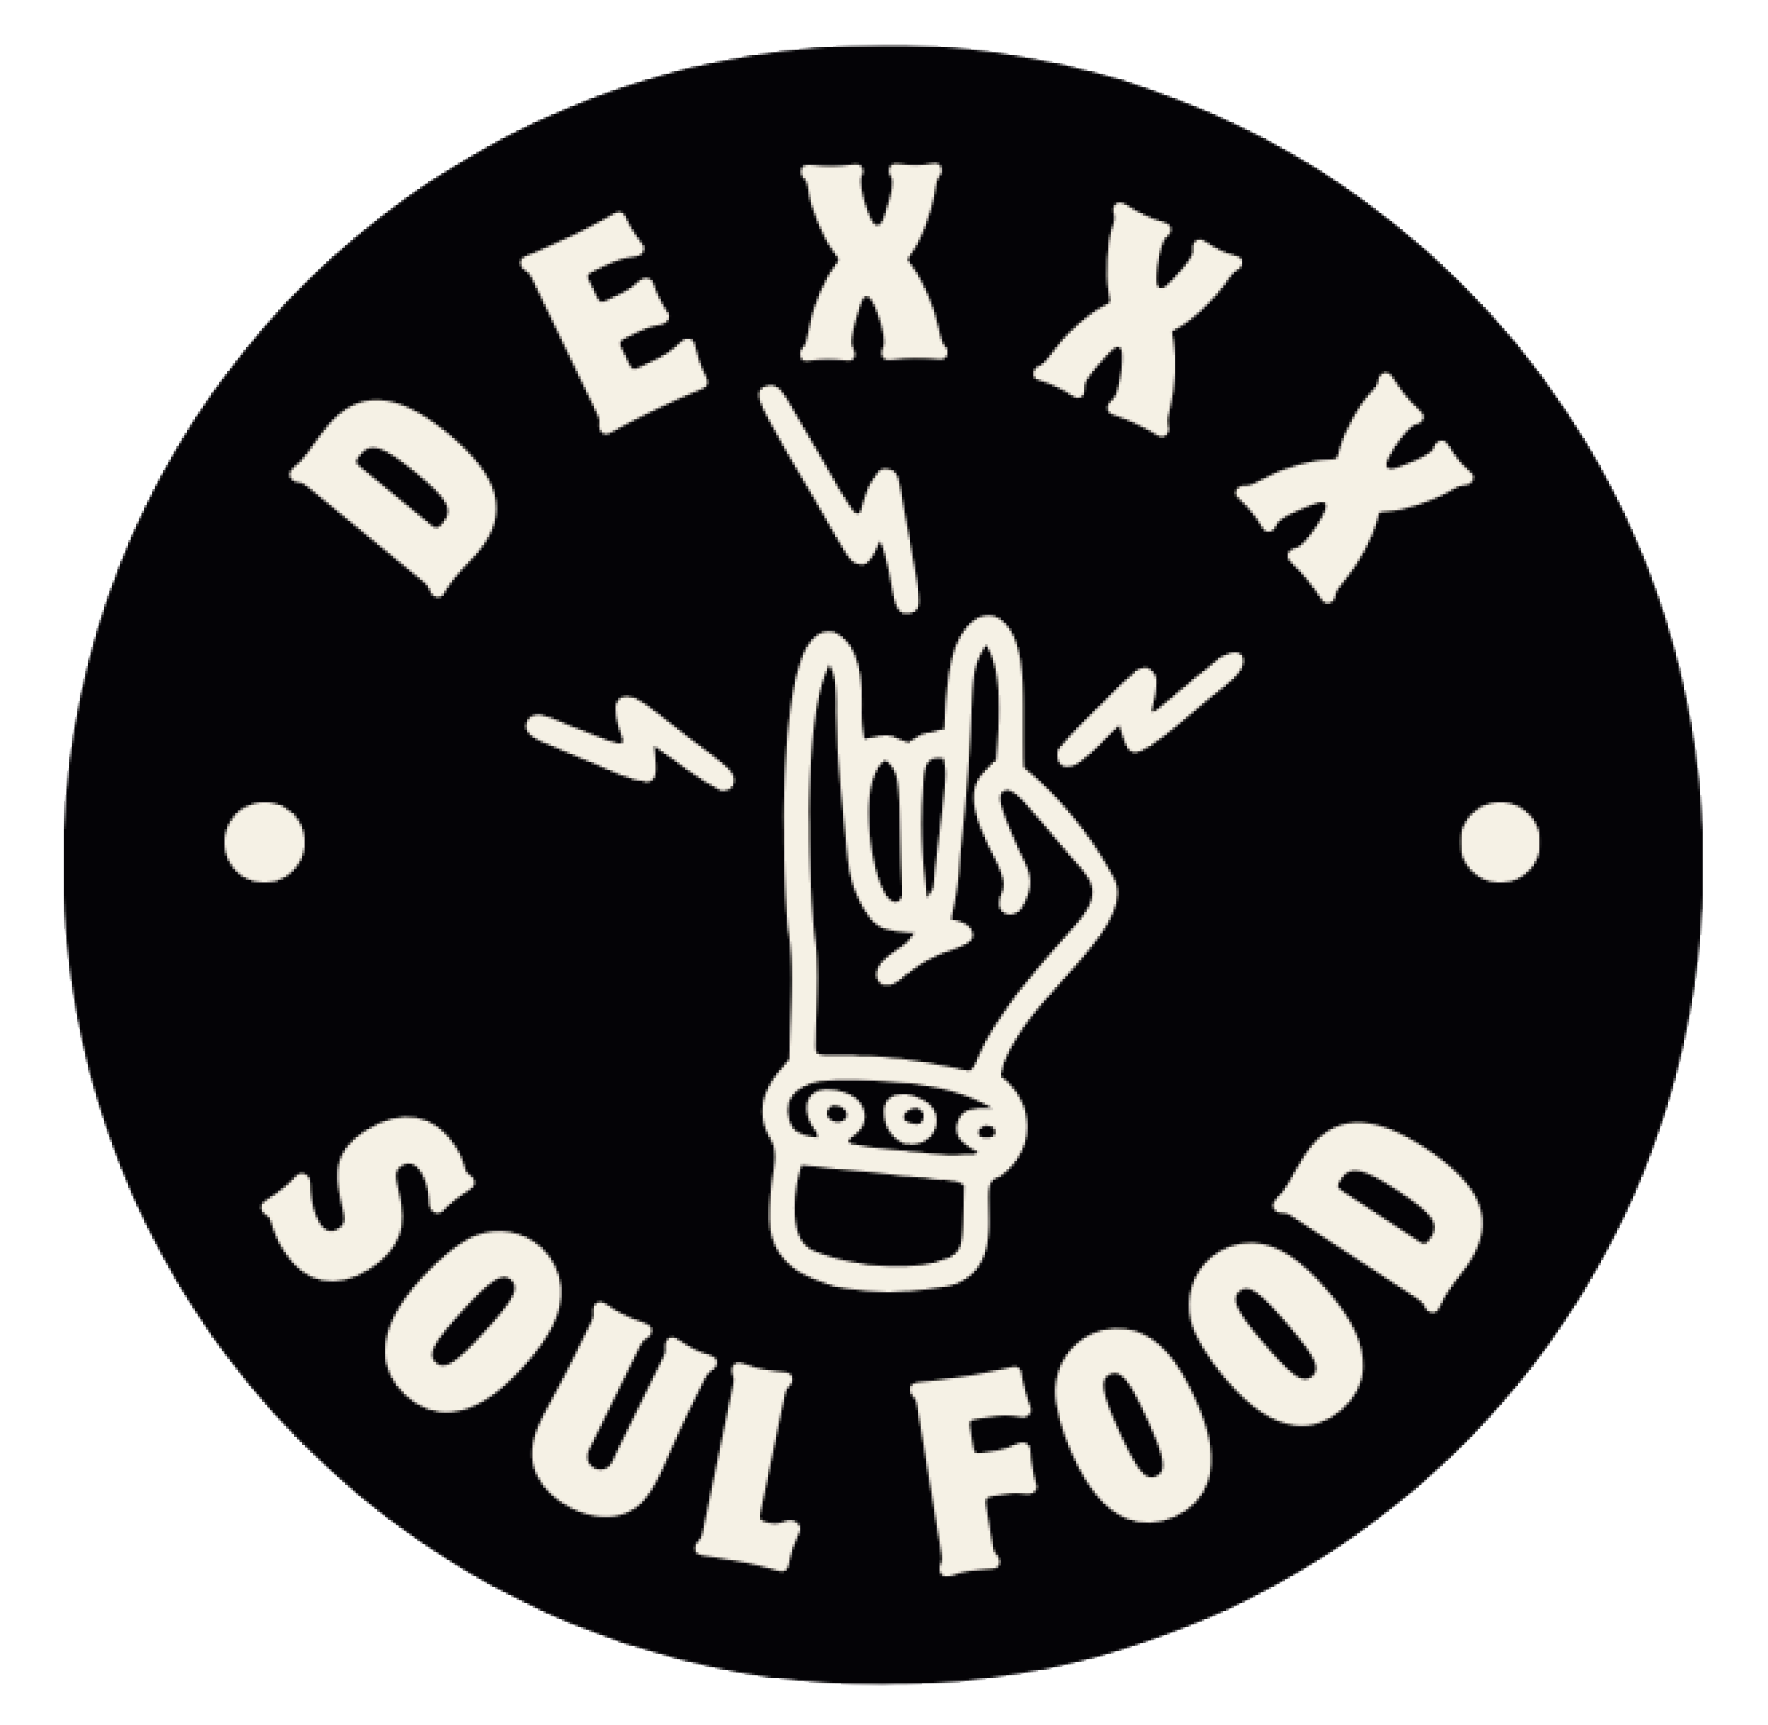 DEXXX Soul Food